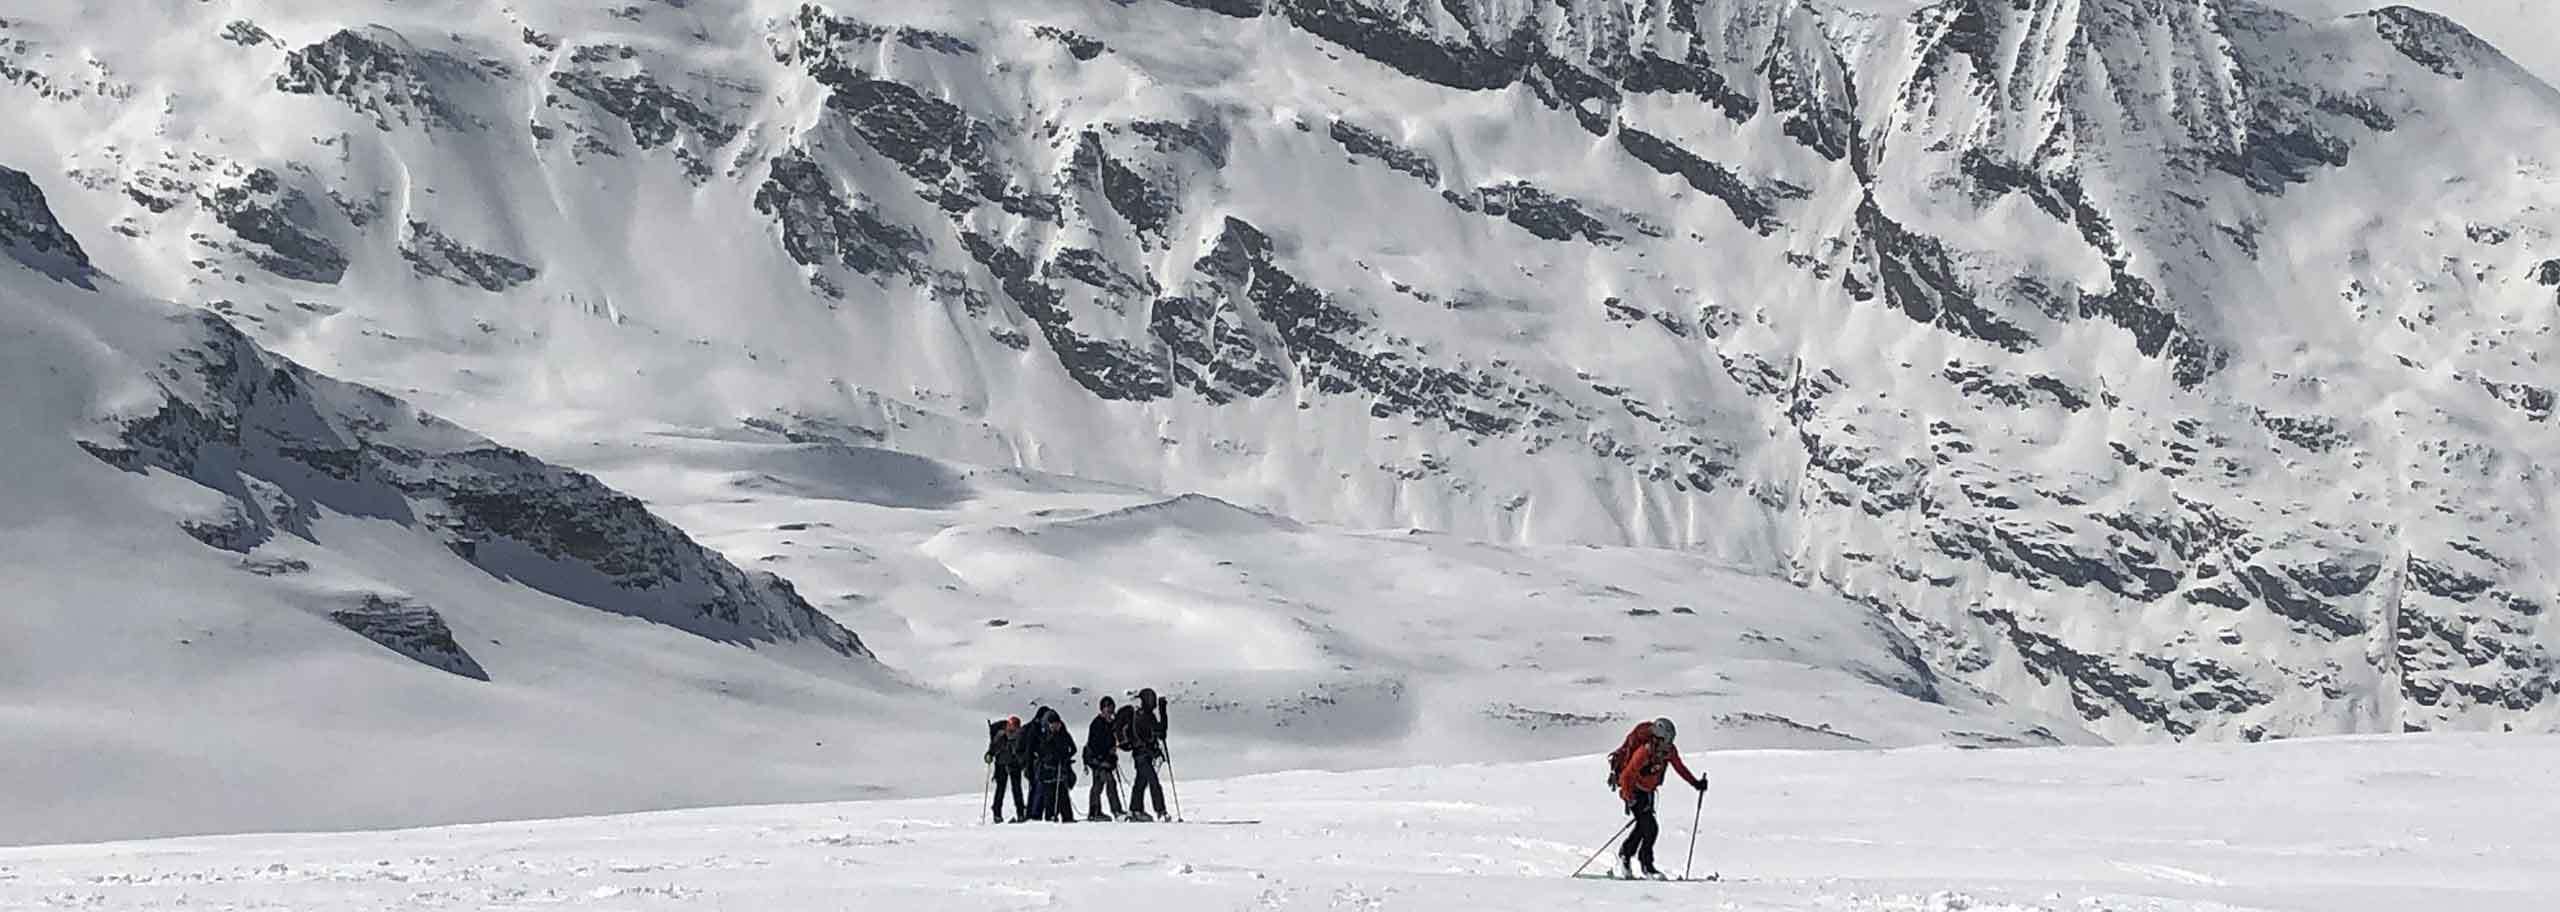 Gran Paradiso Ski Mountaineering Guided Experience